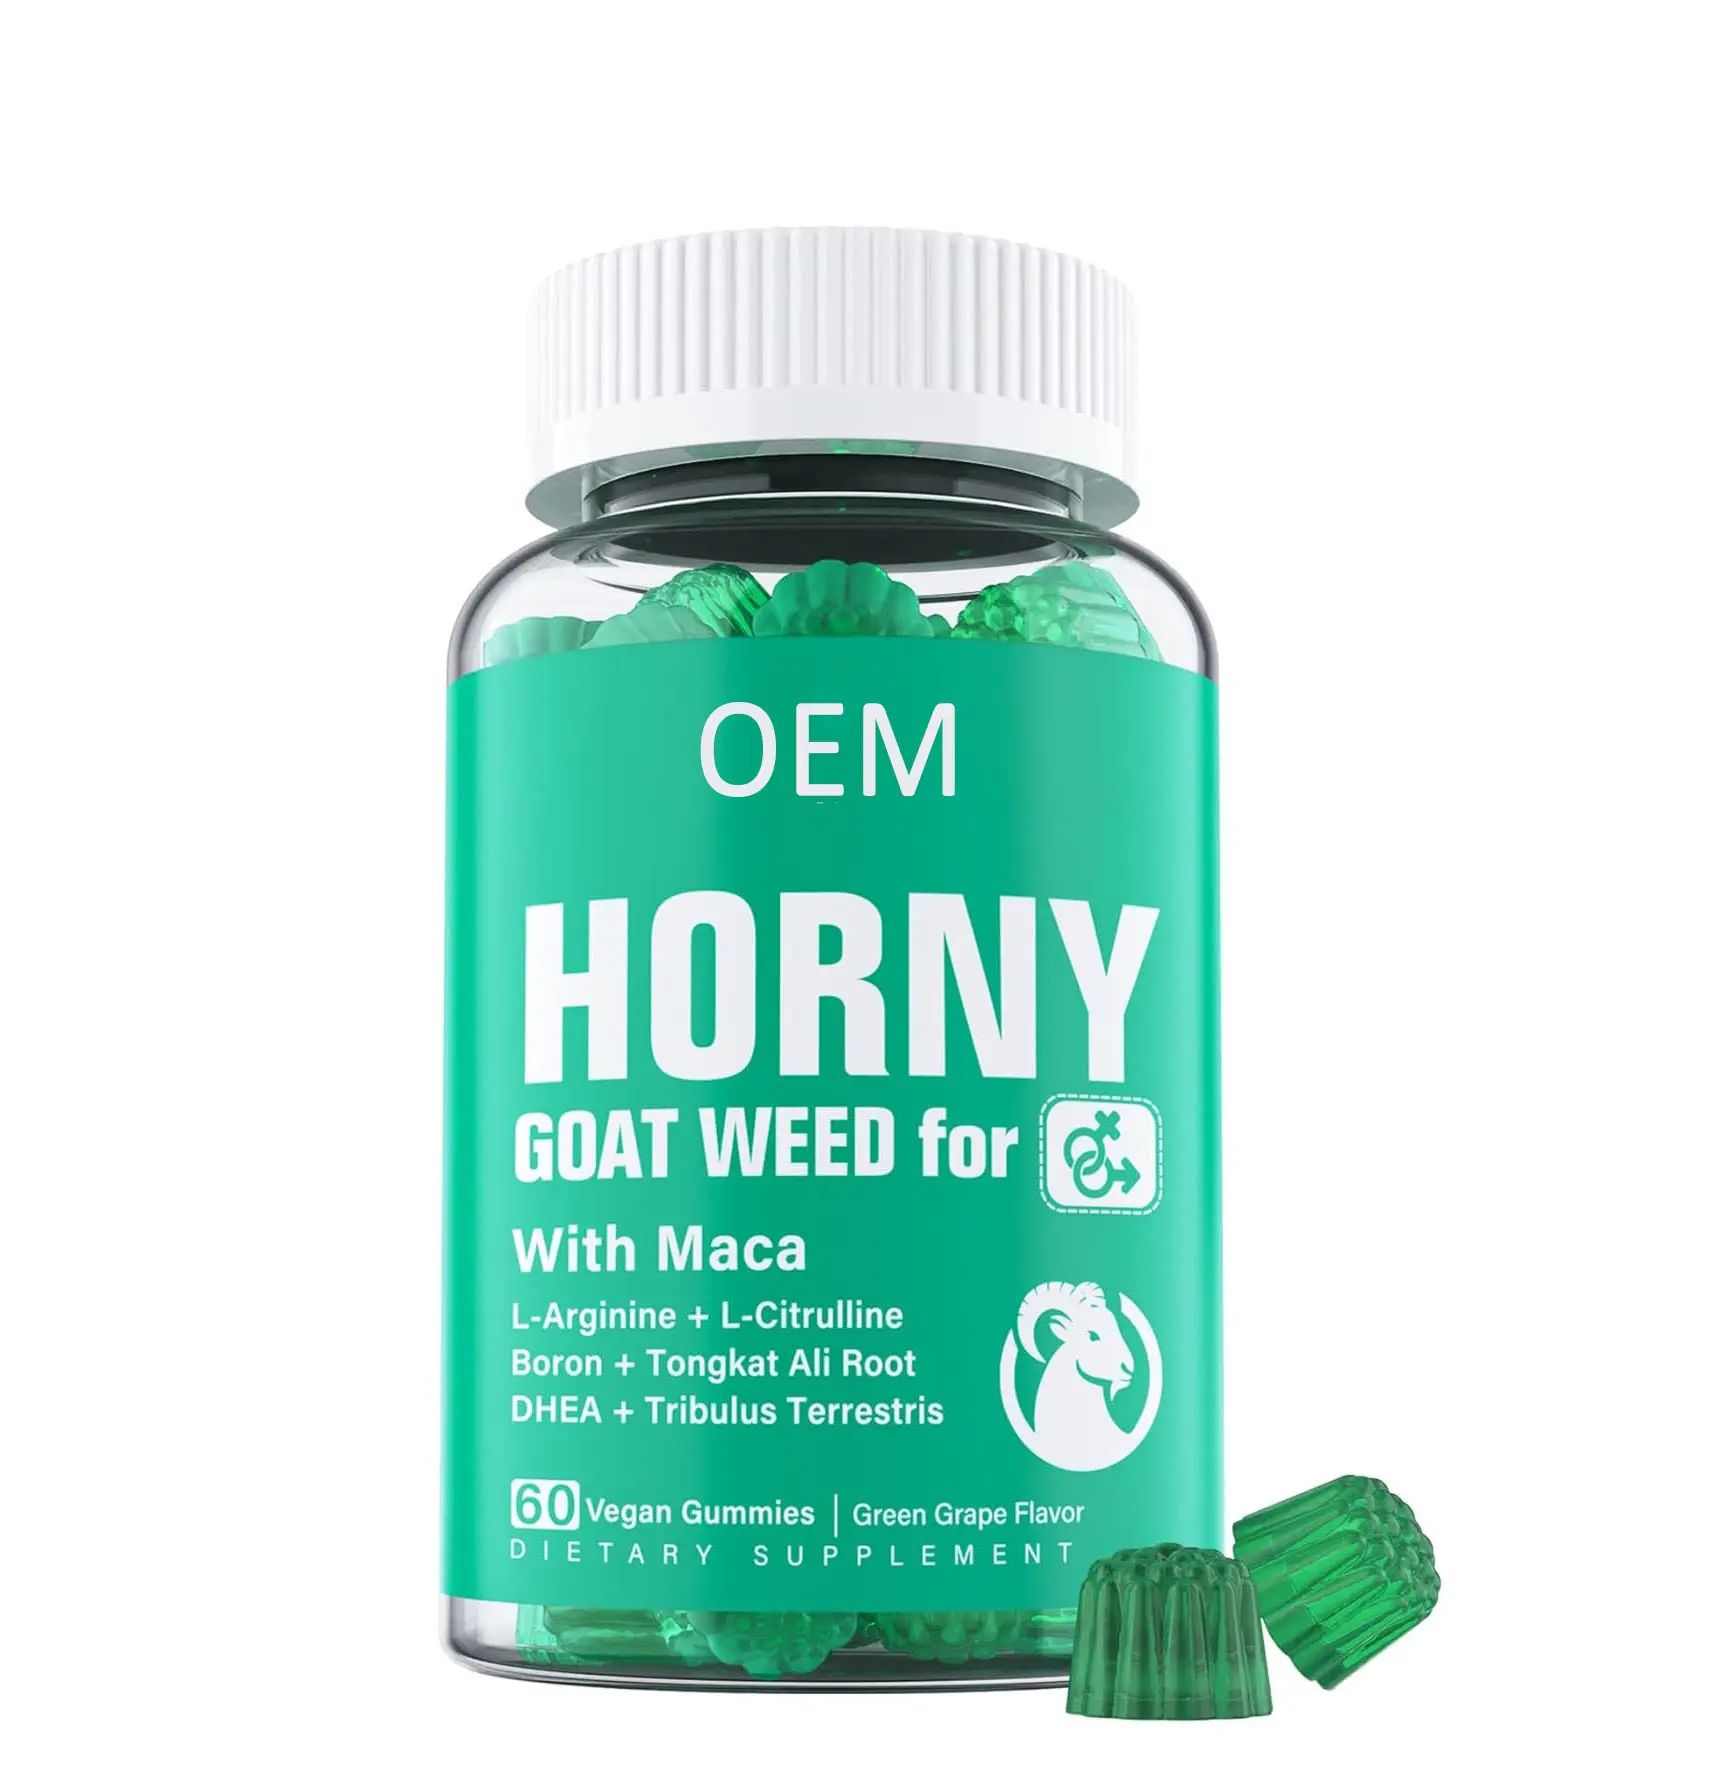 OEM Horny Goat Weed Gummy 1500mg que contiene Maca Tribulus Terrestris Tongkat Ali potenciador de energía natural